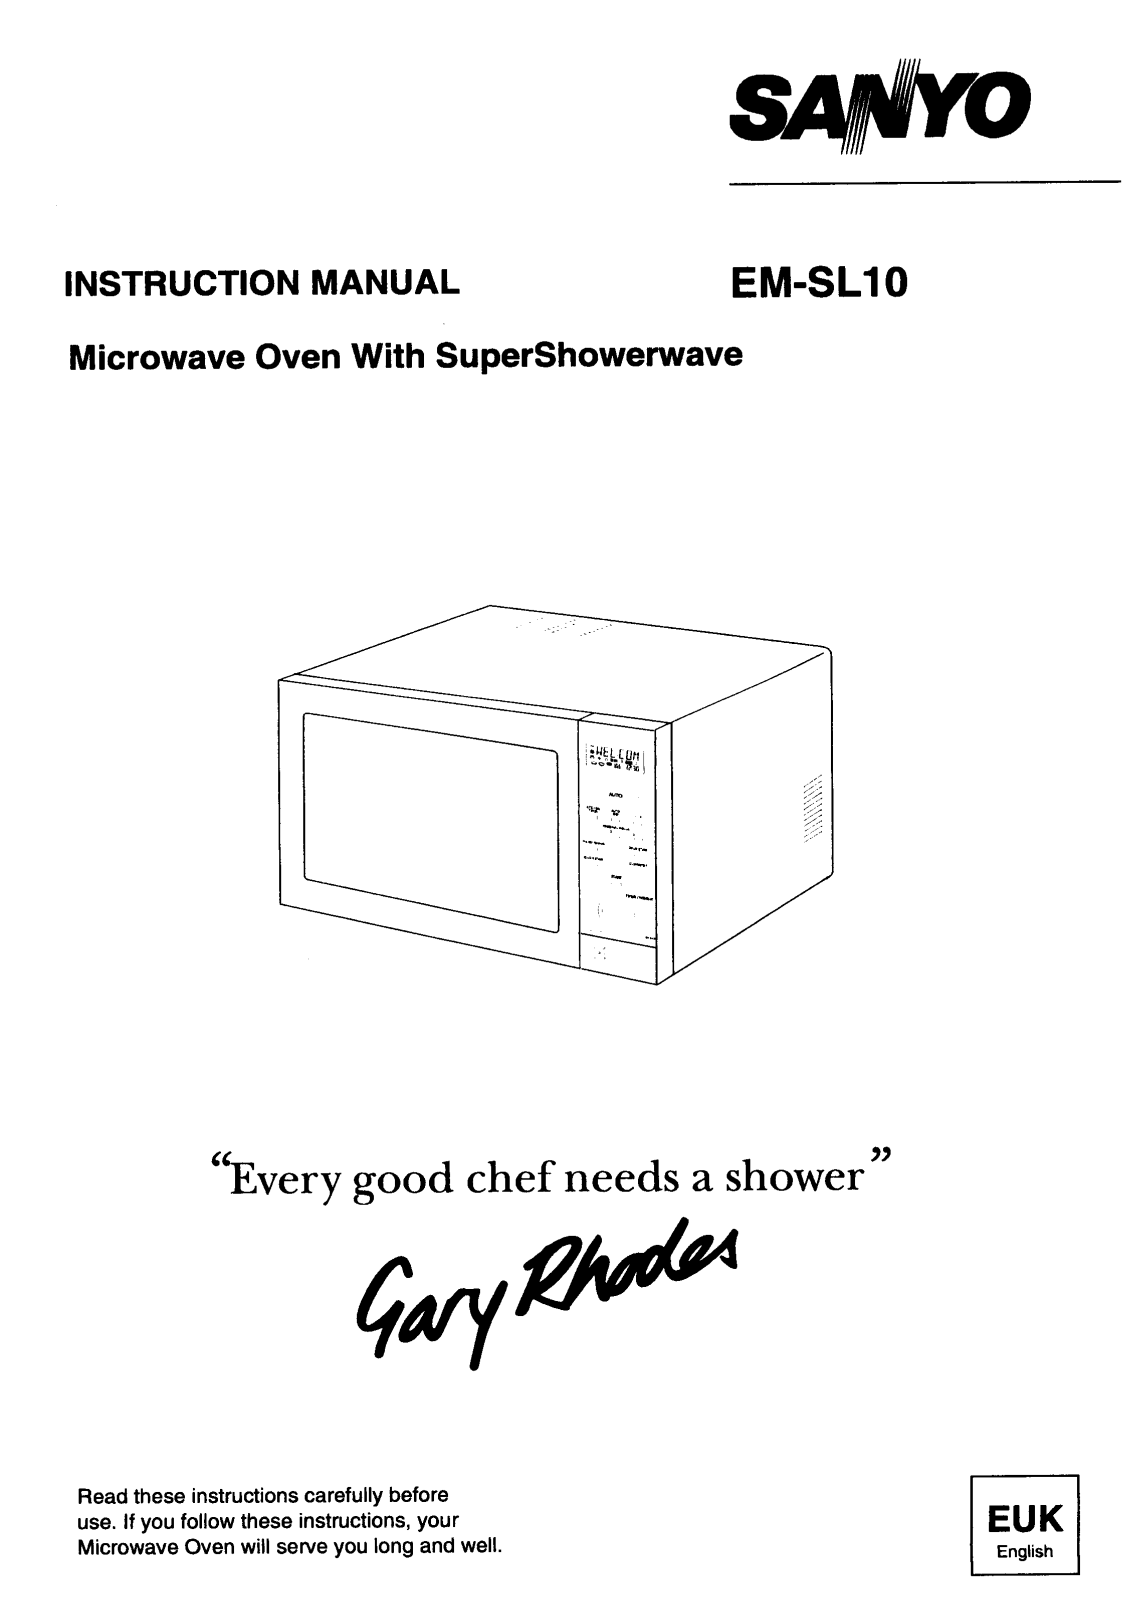 Sanyo EM-SL10 Instruction Manual